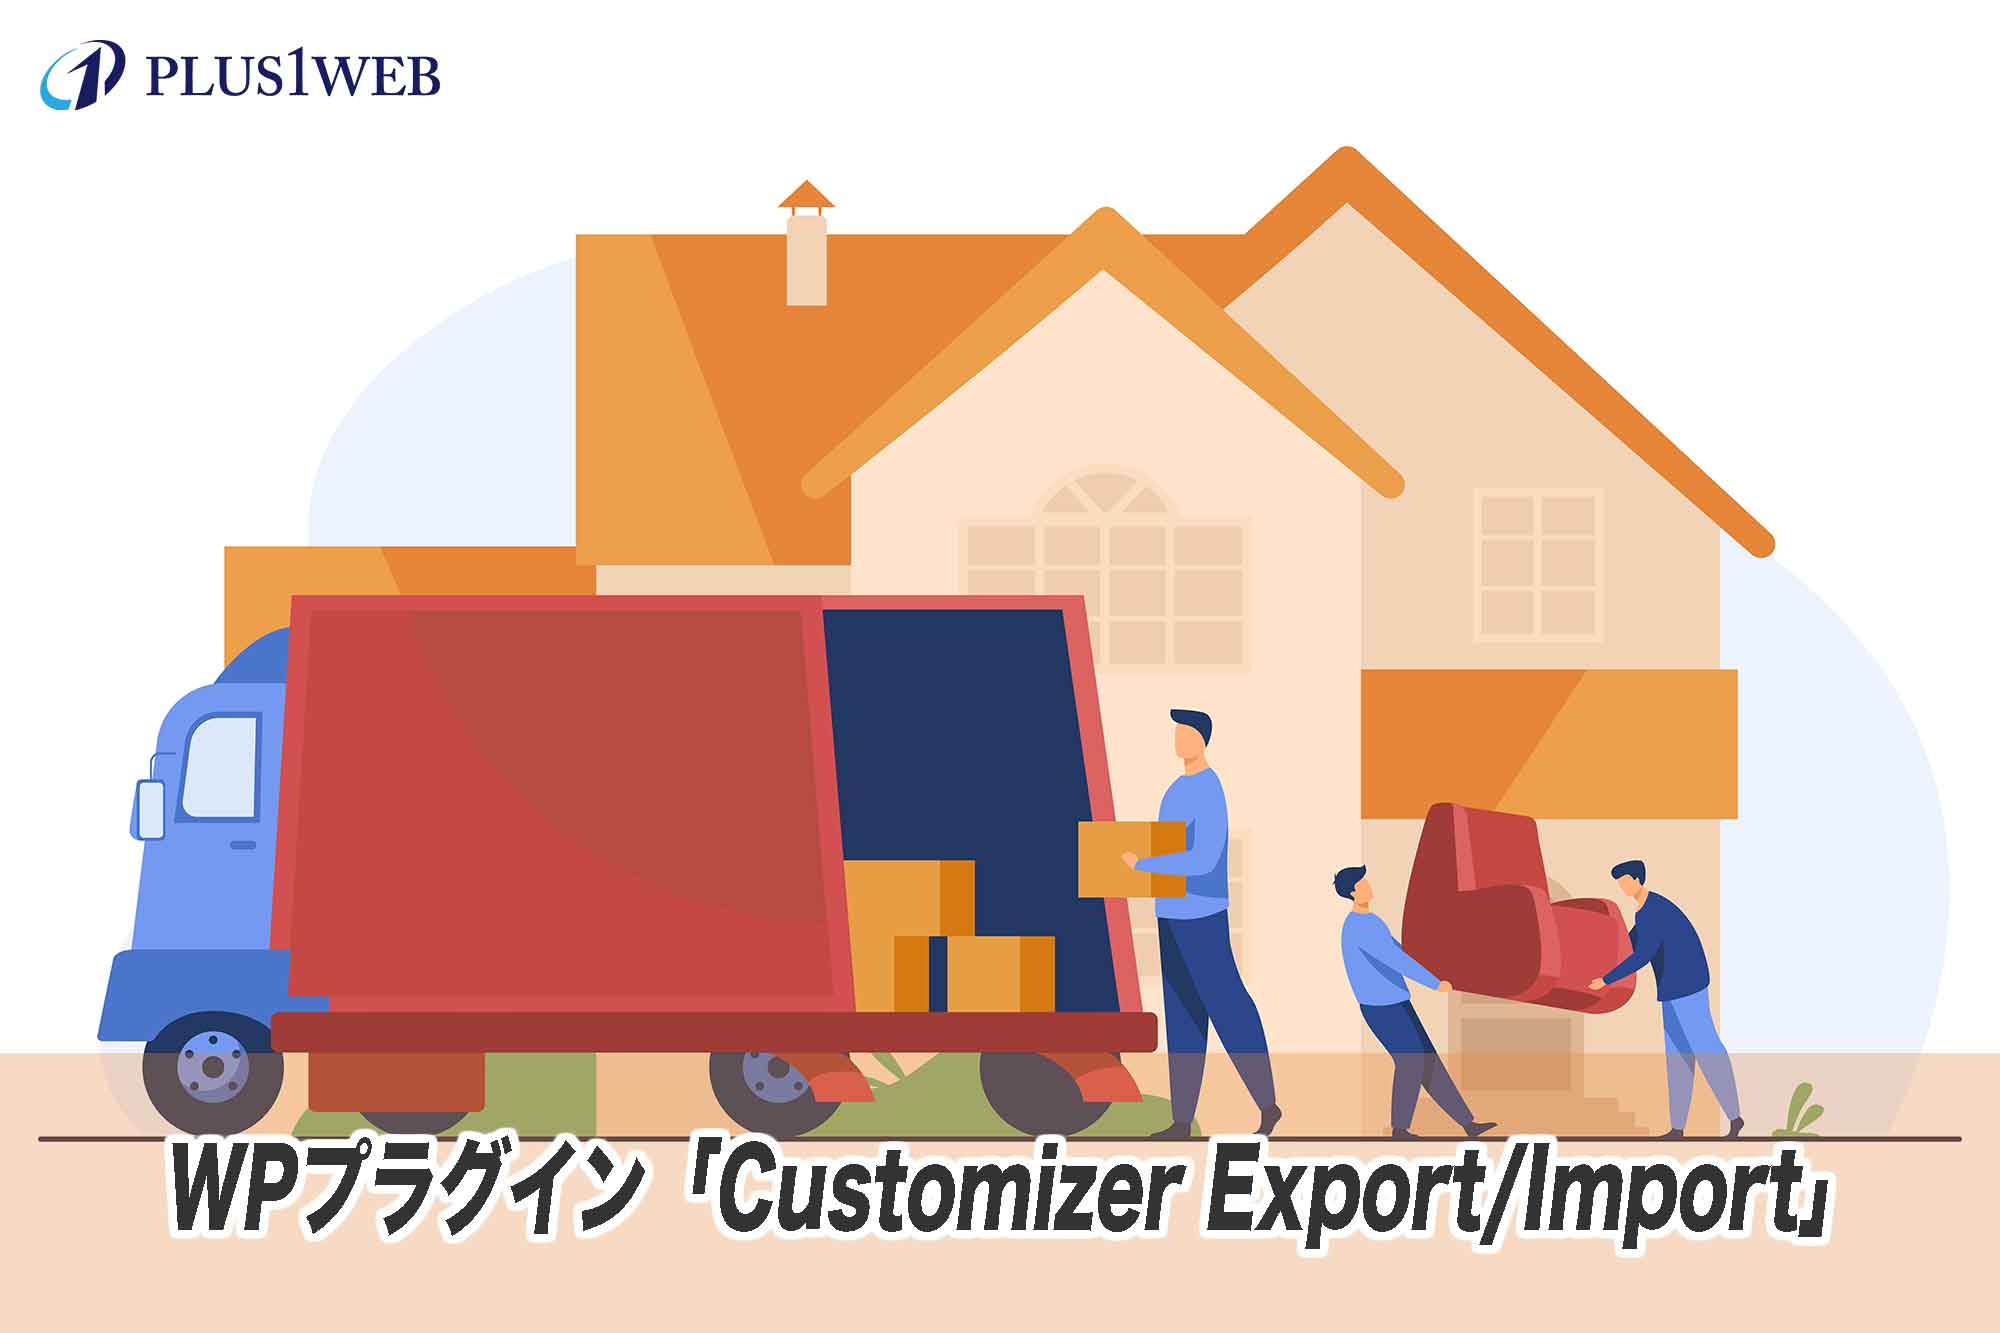 Custmizer Export/Import